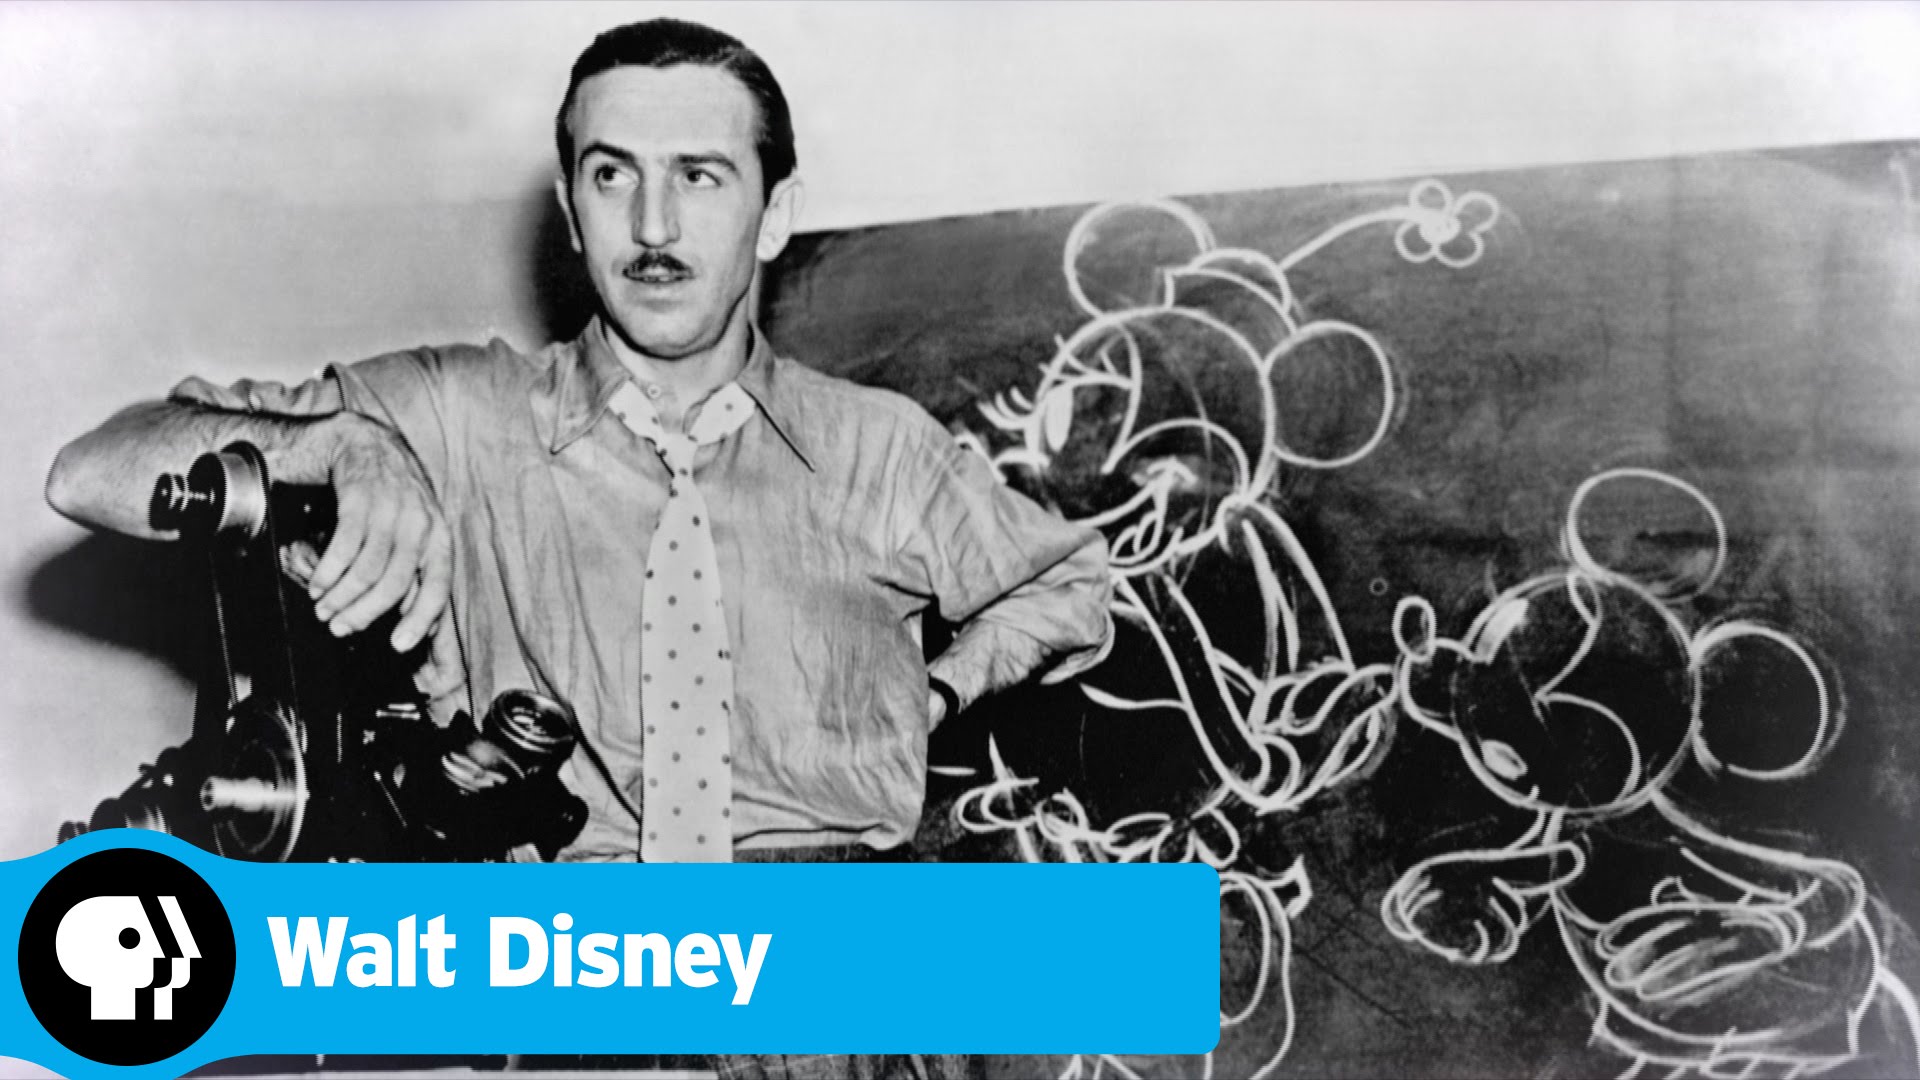 Walt Disney, Inspirer and Driver